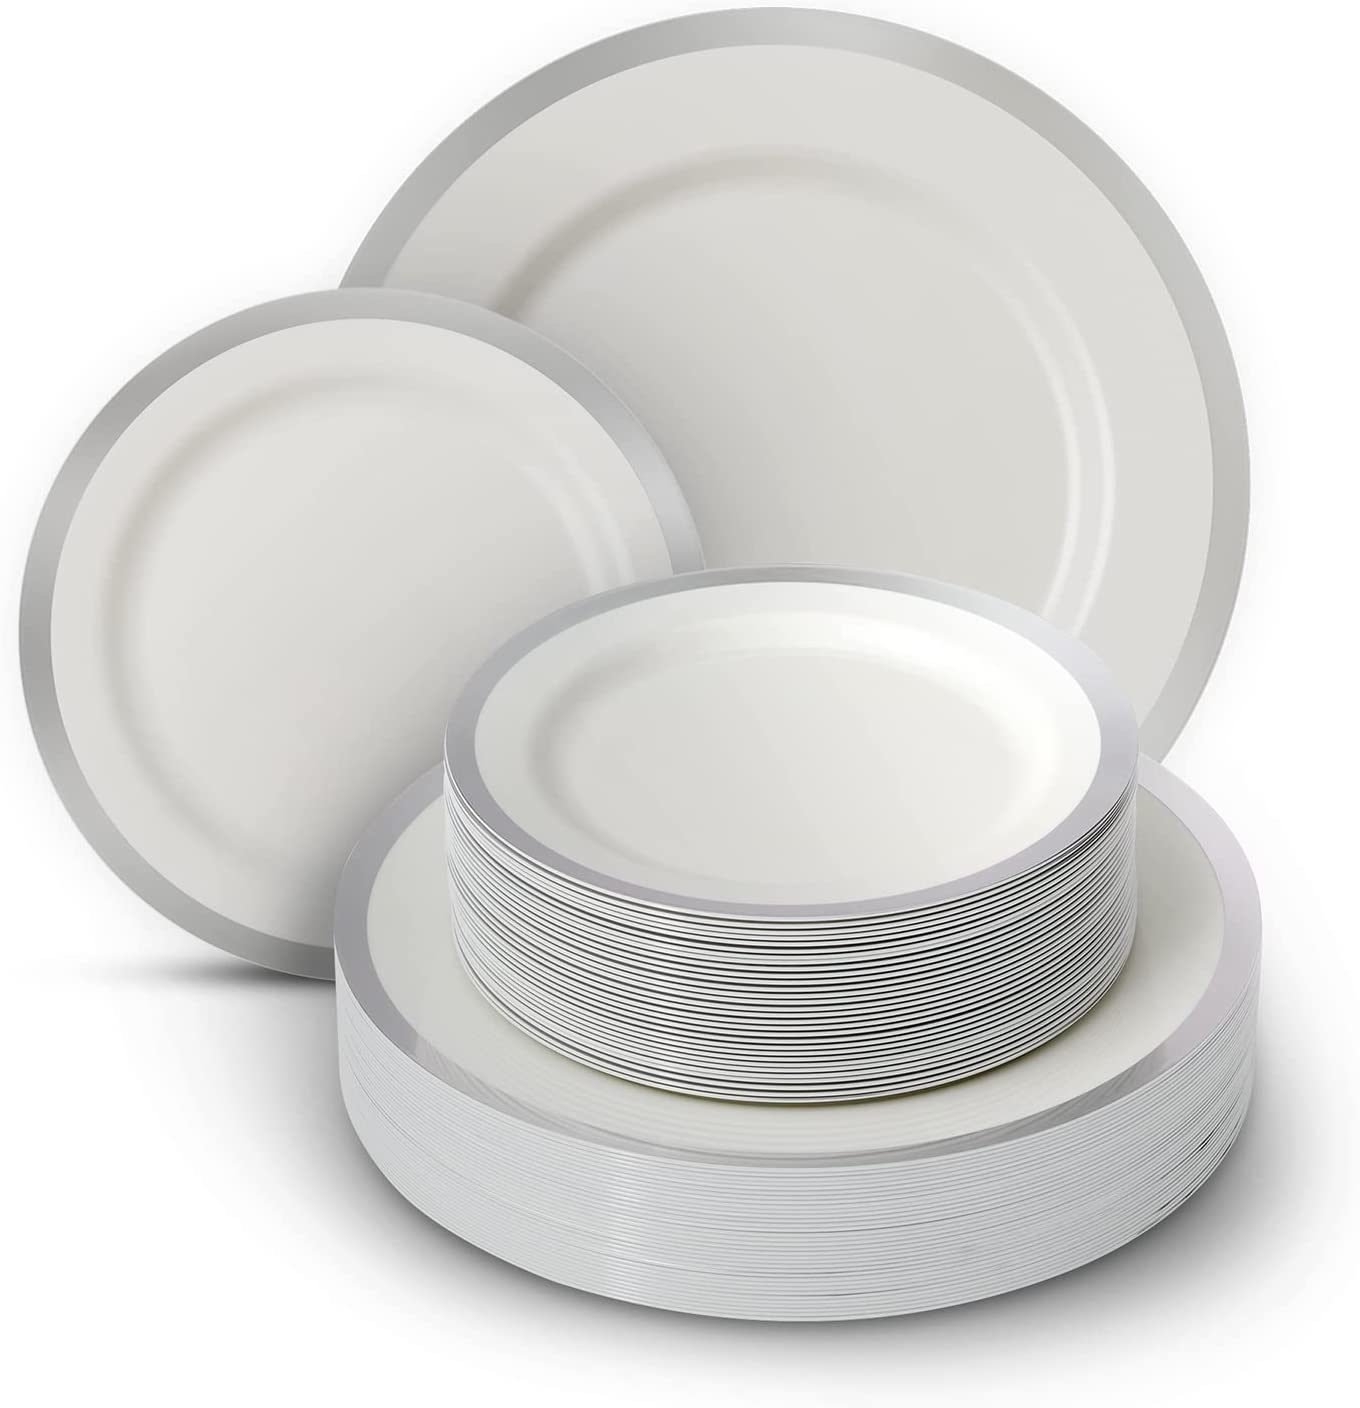 60 PCS Silver Plastic Plates - 30 Silver Rim Dinner Plates & 30 Salad or Dessert Plates w/ Grid Design